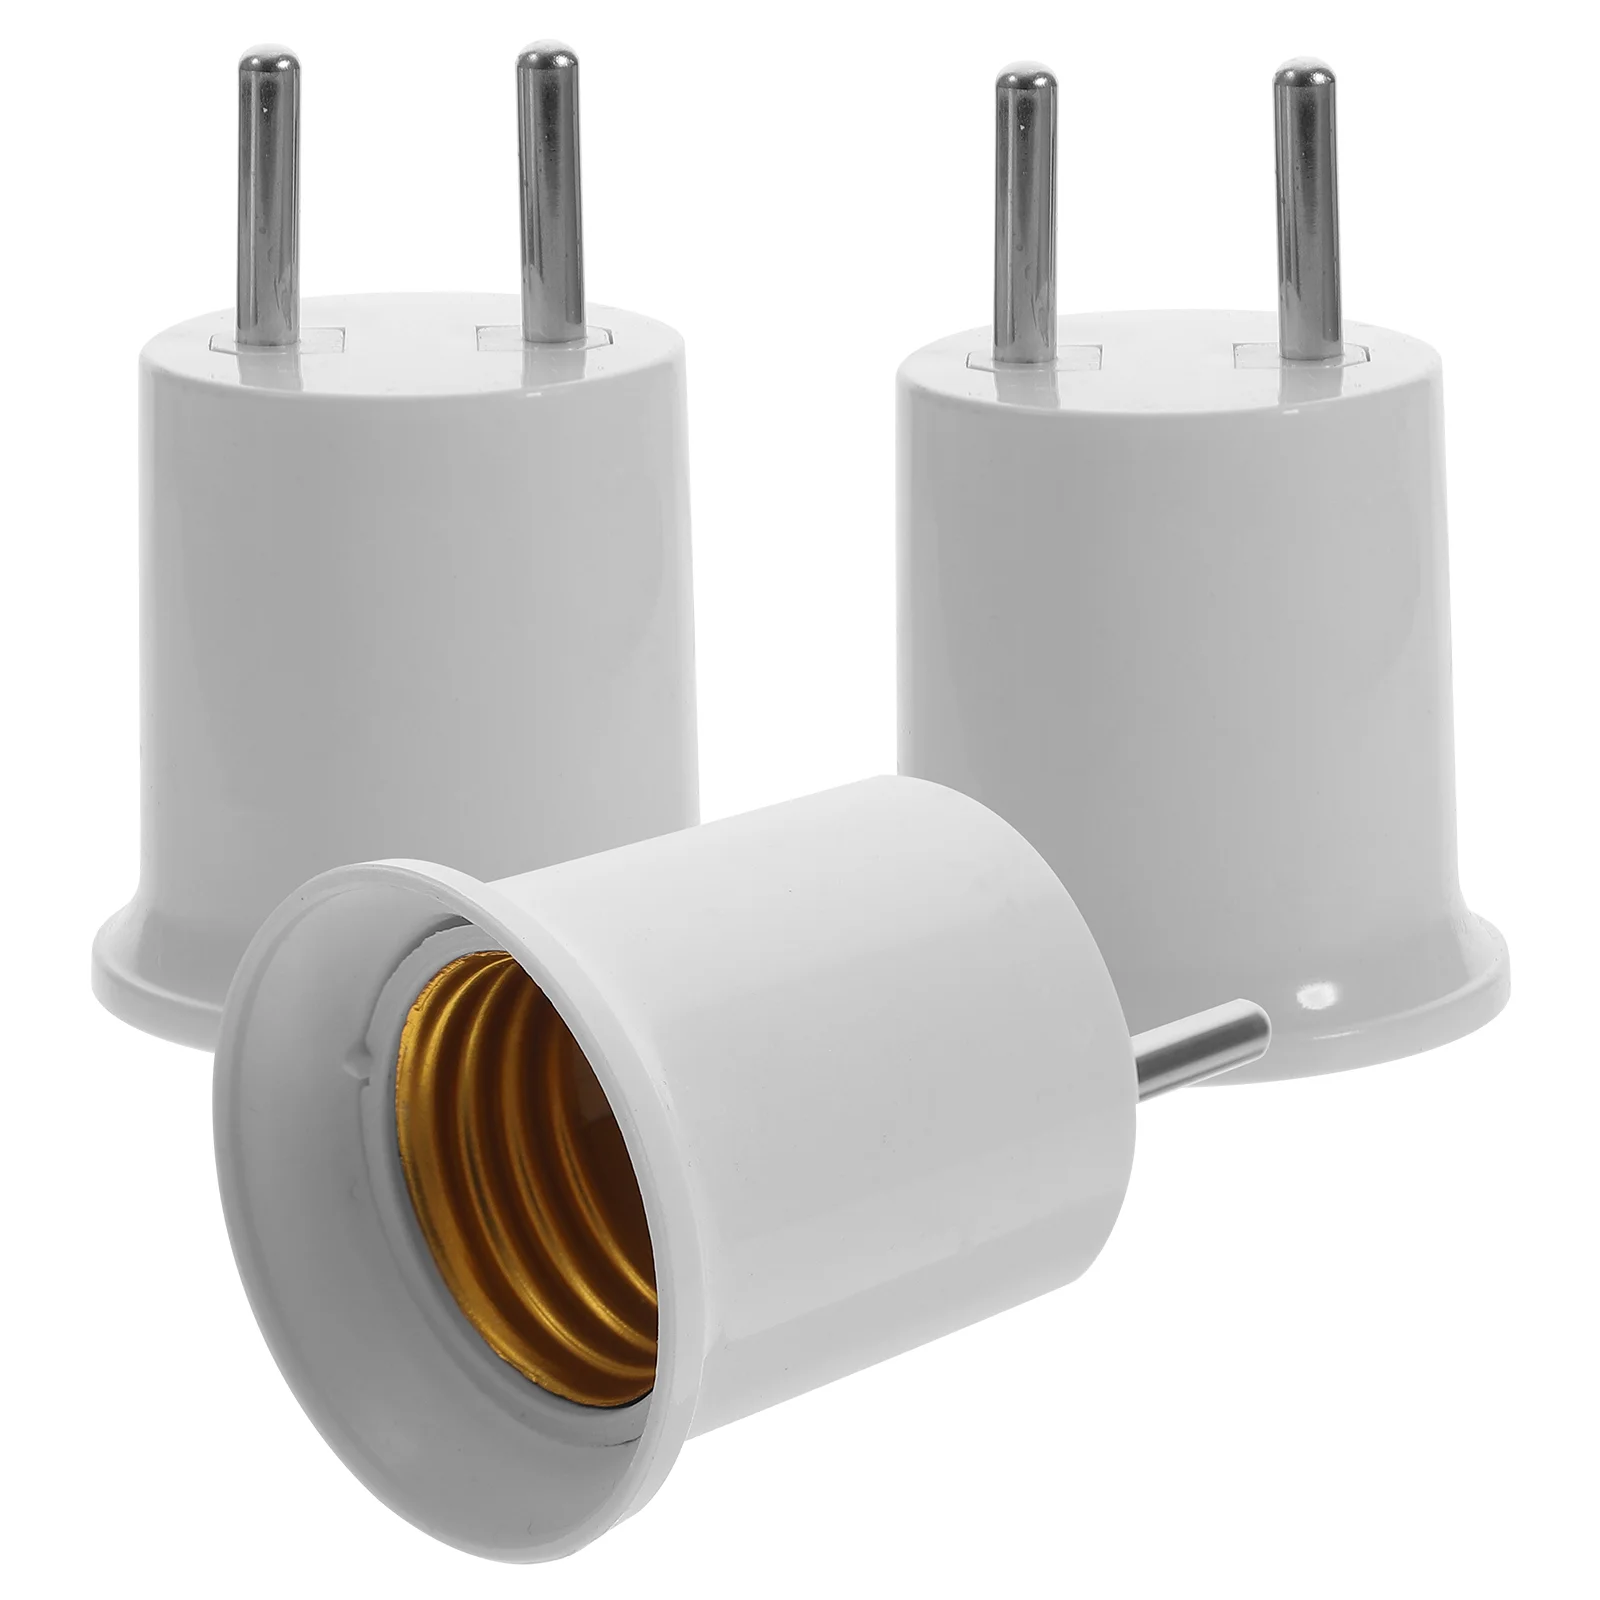 

3 Pcs E26 Conversion Socket E27 Light Holder Plug in Lamp to Adapter Copper Bulb Base